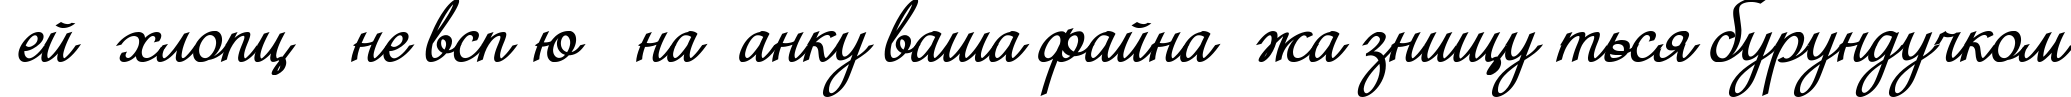 Пример написания шрифтом MiniDemo текста на украинском